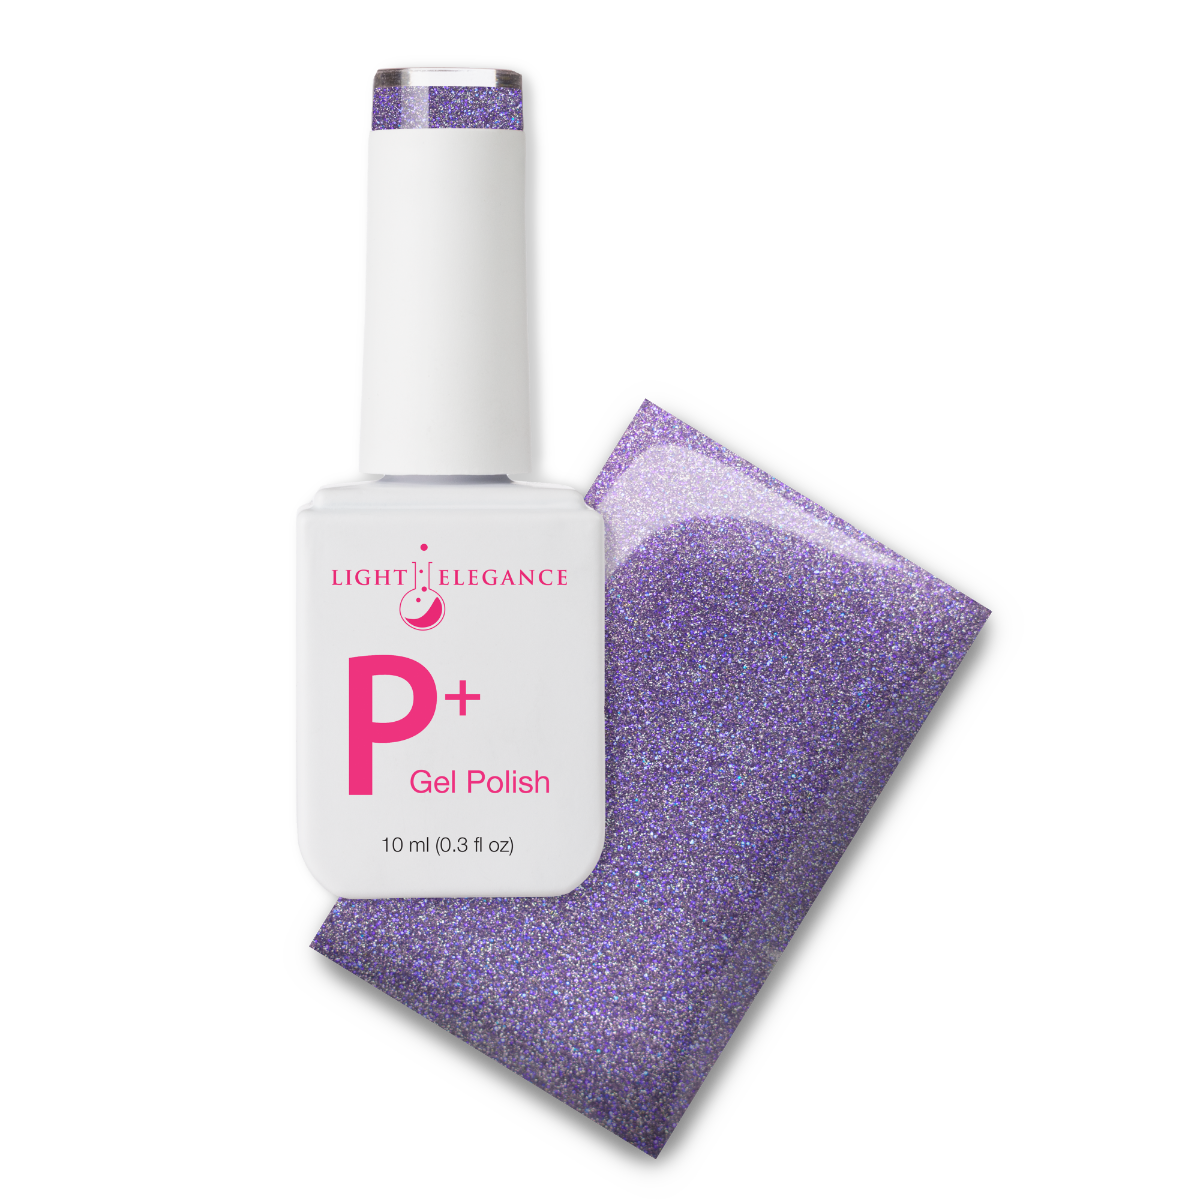 Light Elegance P+ Soak Off Glitter Gel - Supernova :: New Packaging - Creata Beauty - Professional Beauty Products